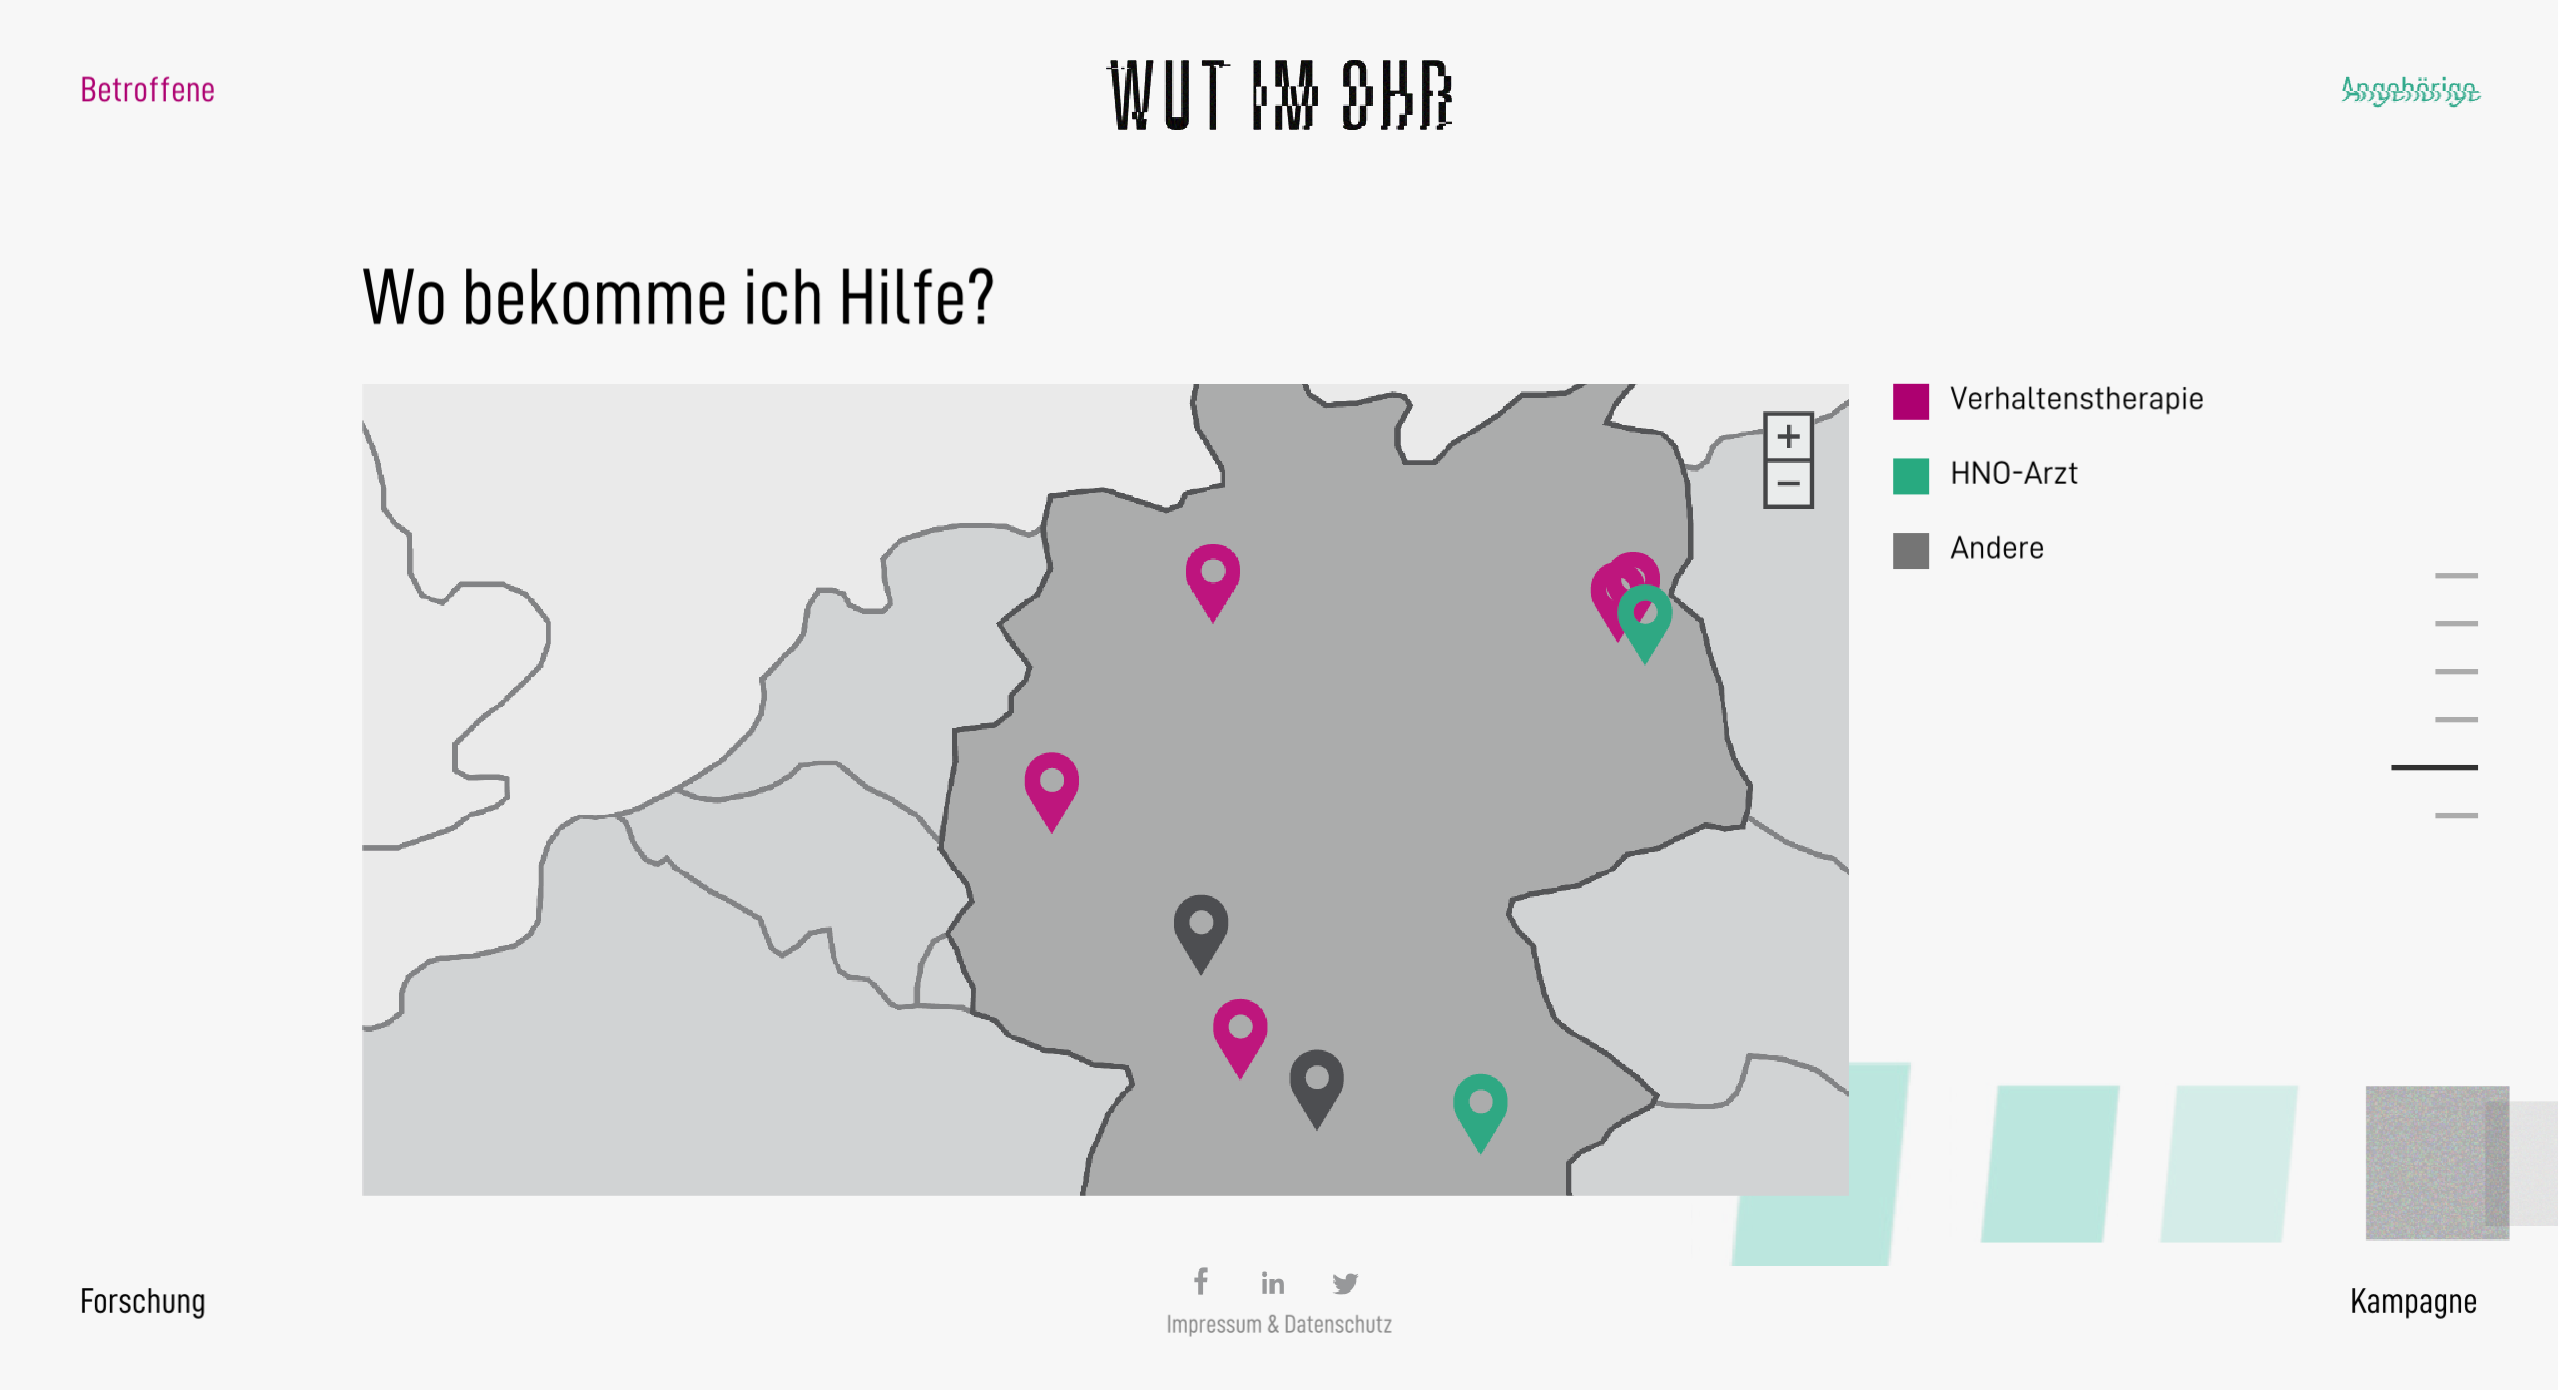 Wut im Ohr – a Digital Campaign